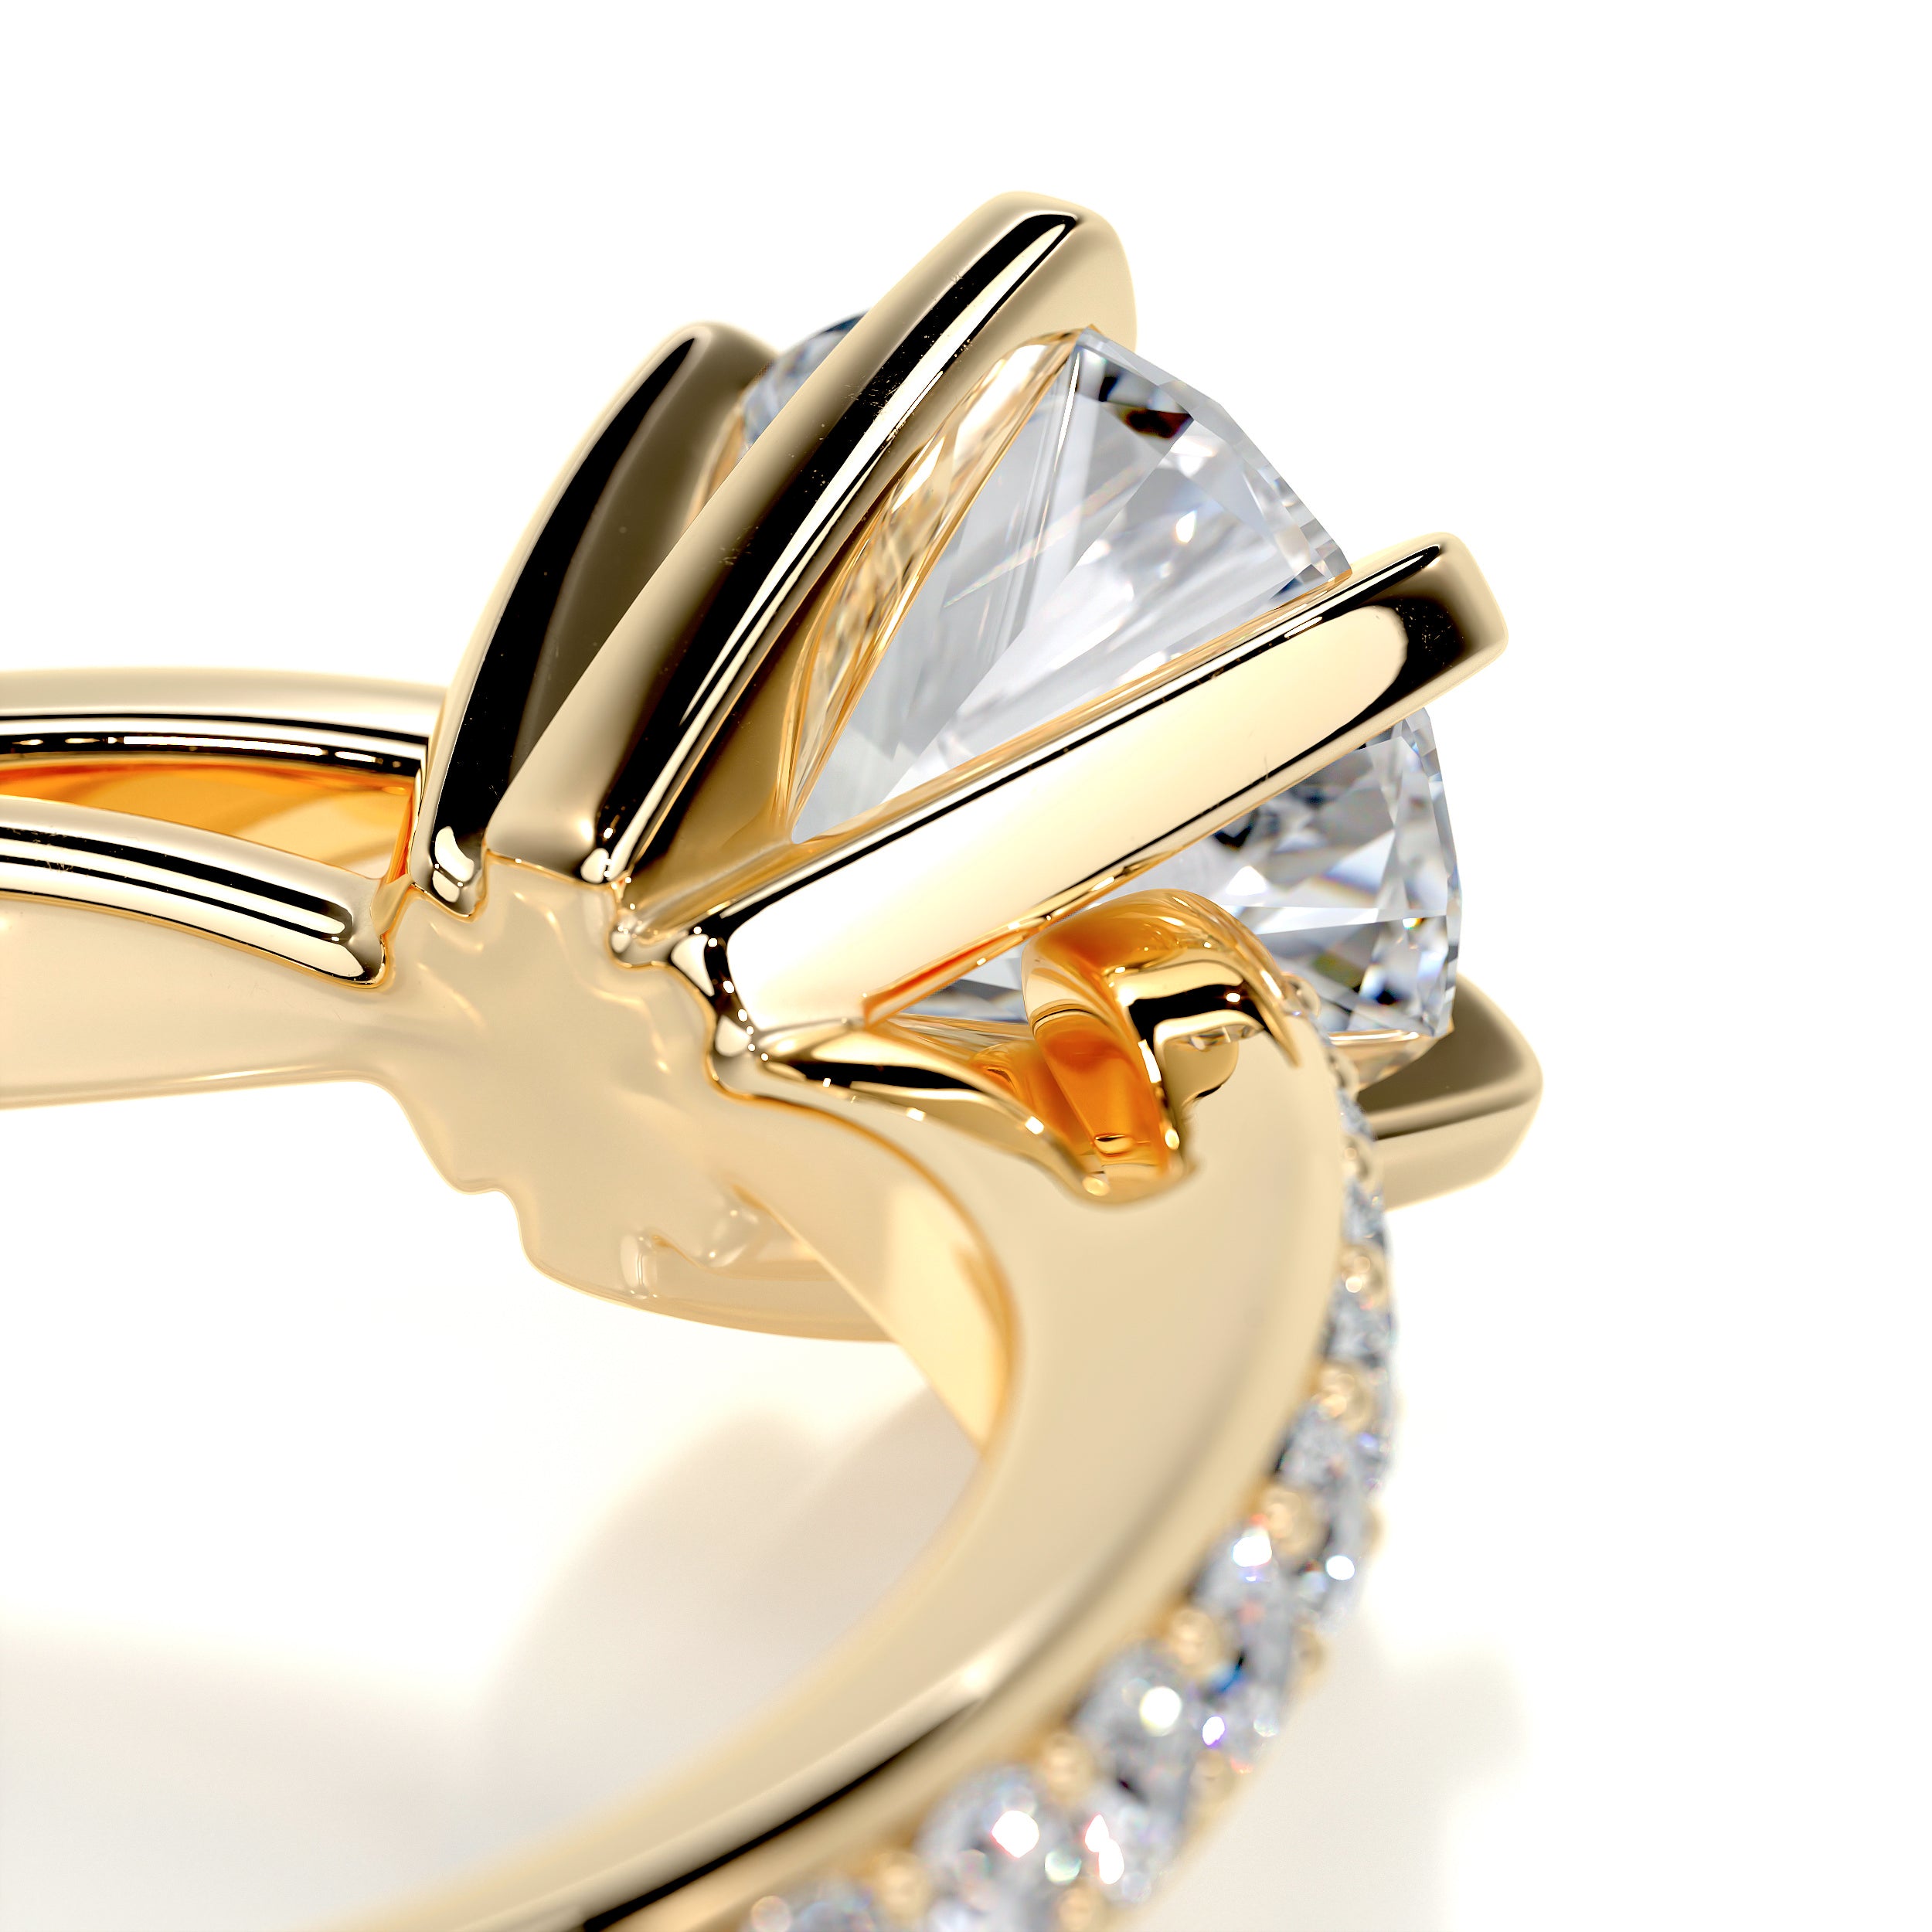 Talia Diamond Engagement Ring   (0.88 Carat) - 18K Yellow Gold